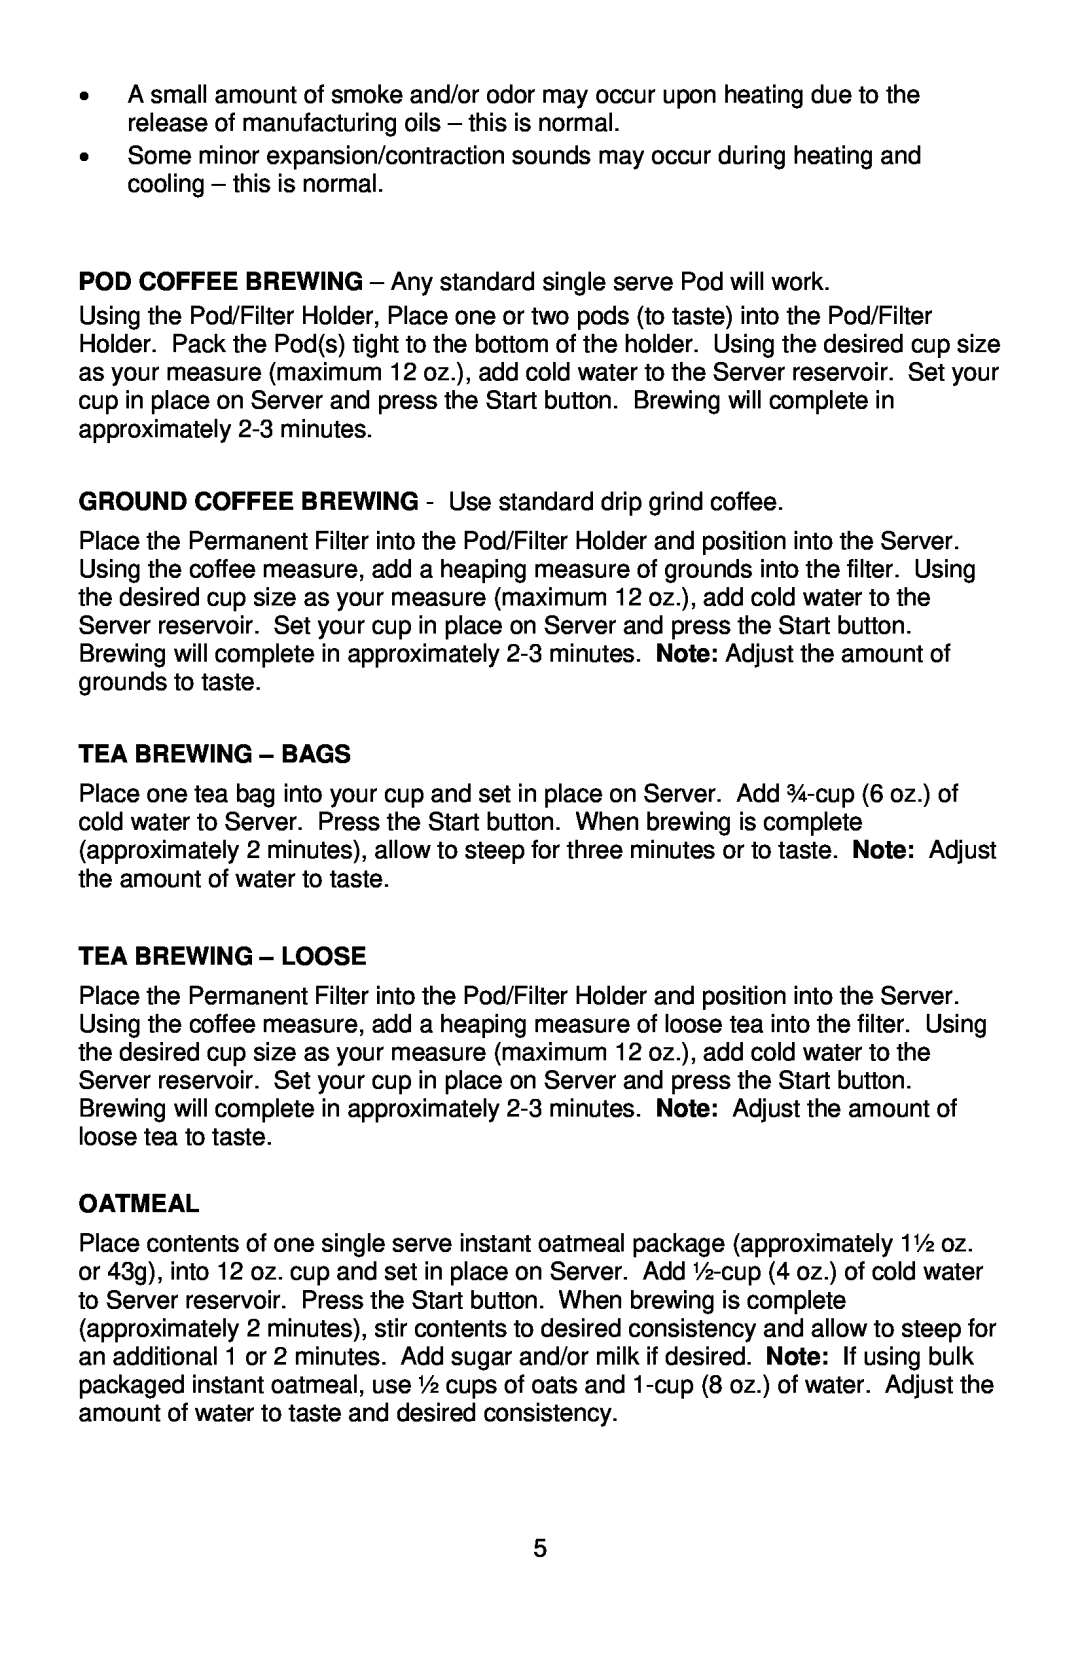 West Bend SINGLE SERVE COFFEEMAKER instruction manual Tea Brewing - Bags, Tea Brewing - Loose, Oatmeal 